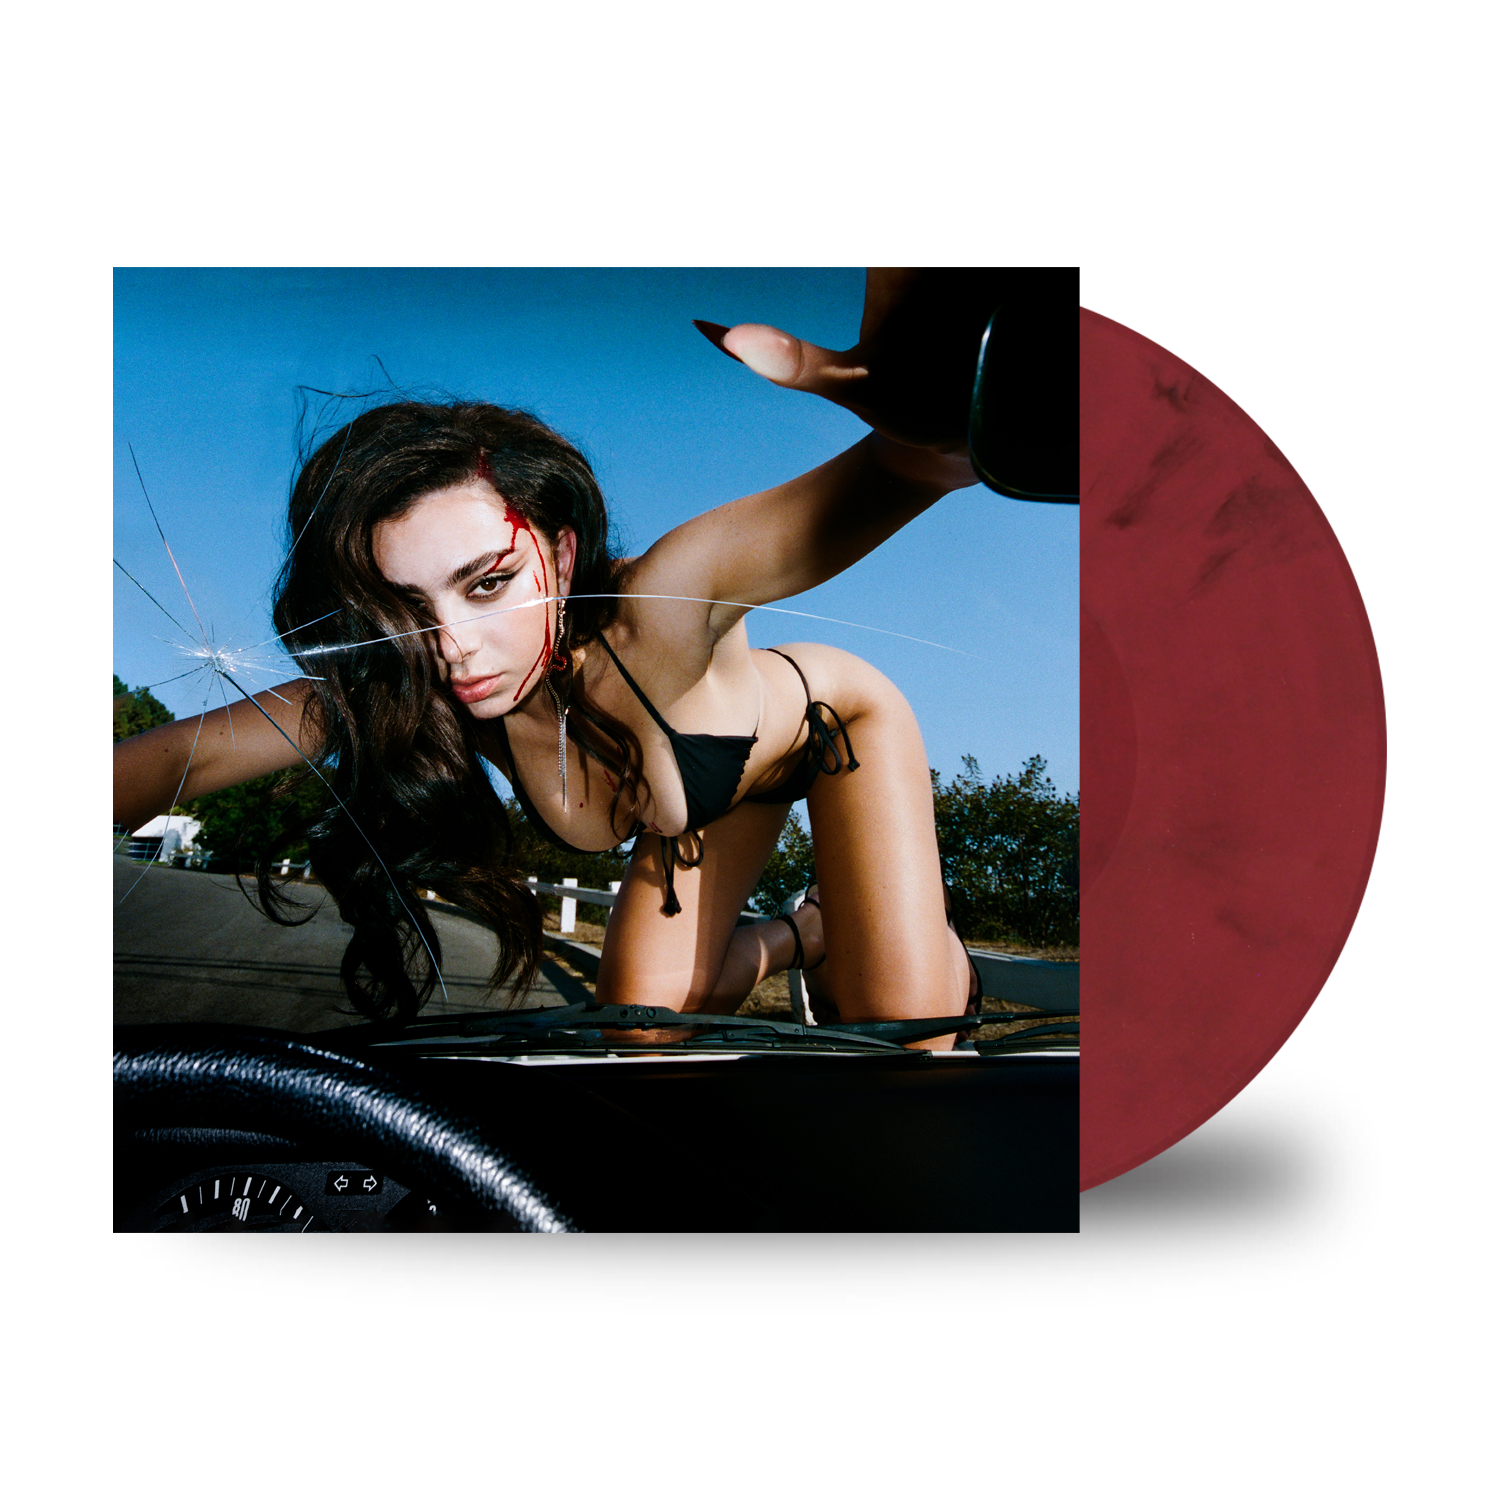 Charli XCX - Crash (Red & Black Marble Vinyl)